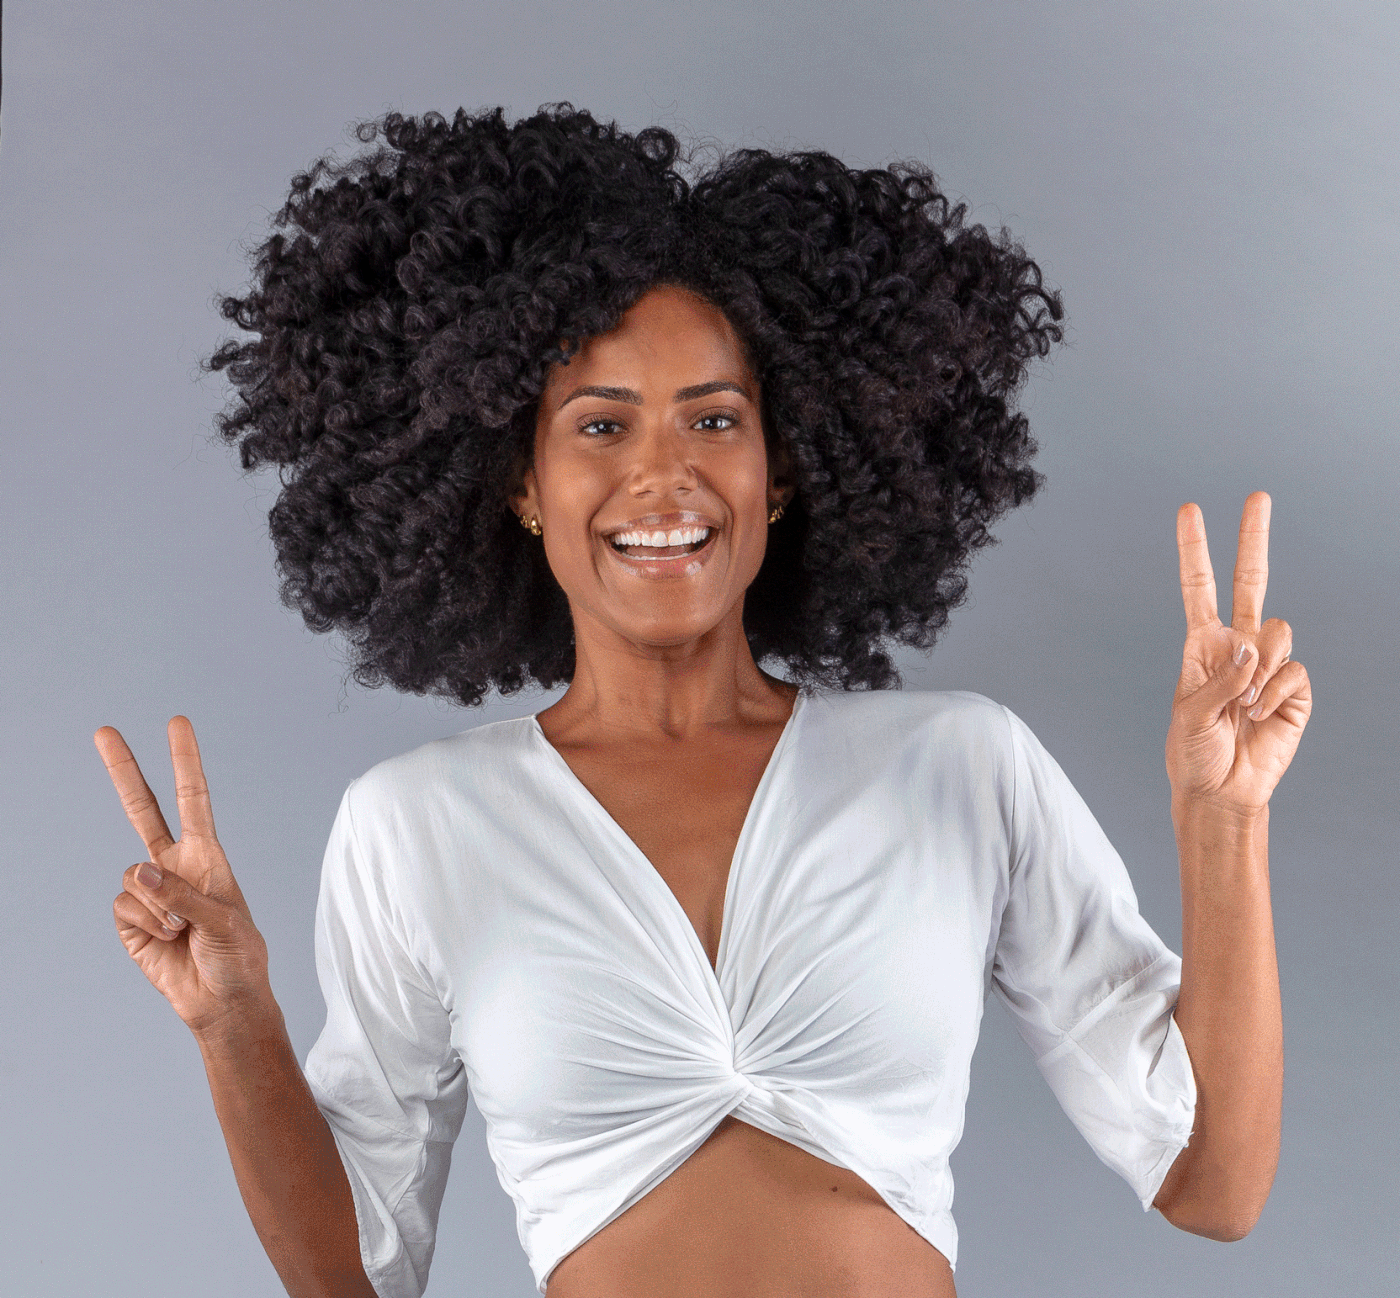 bahia Brasil Fotografia model Photography  photoshoot retouch salvador studio woman